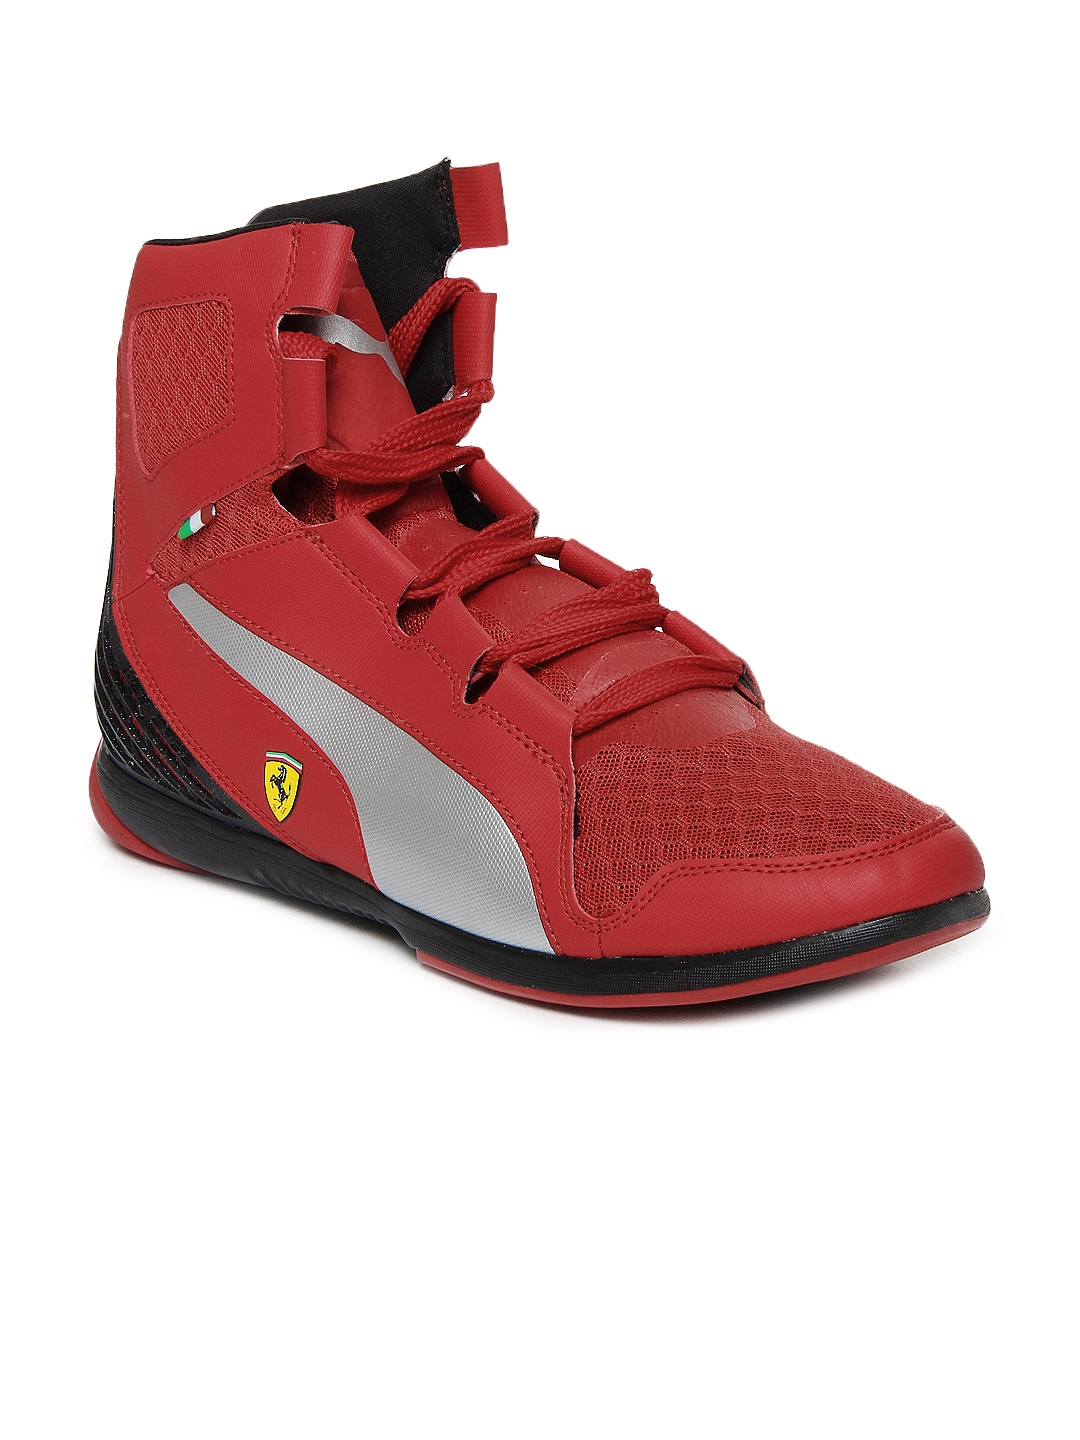 Ferrari WebCage Sports Shoes 